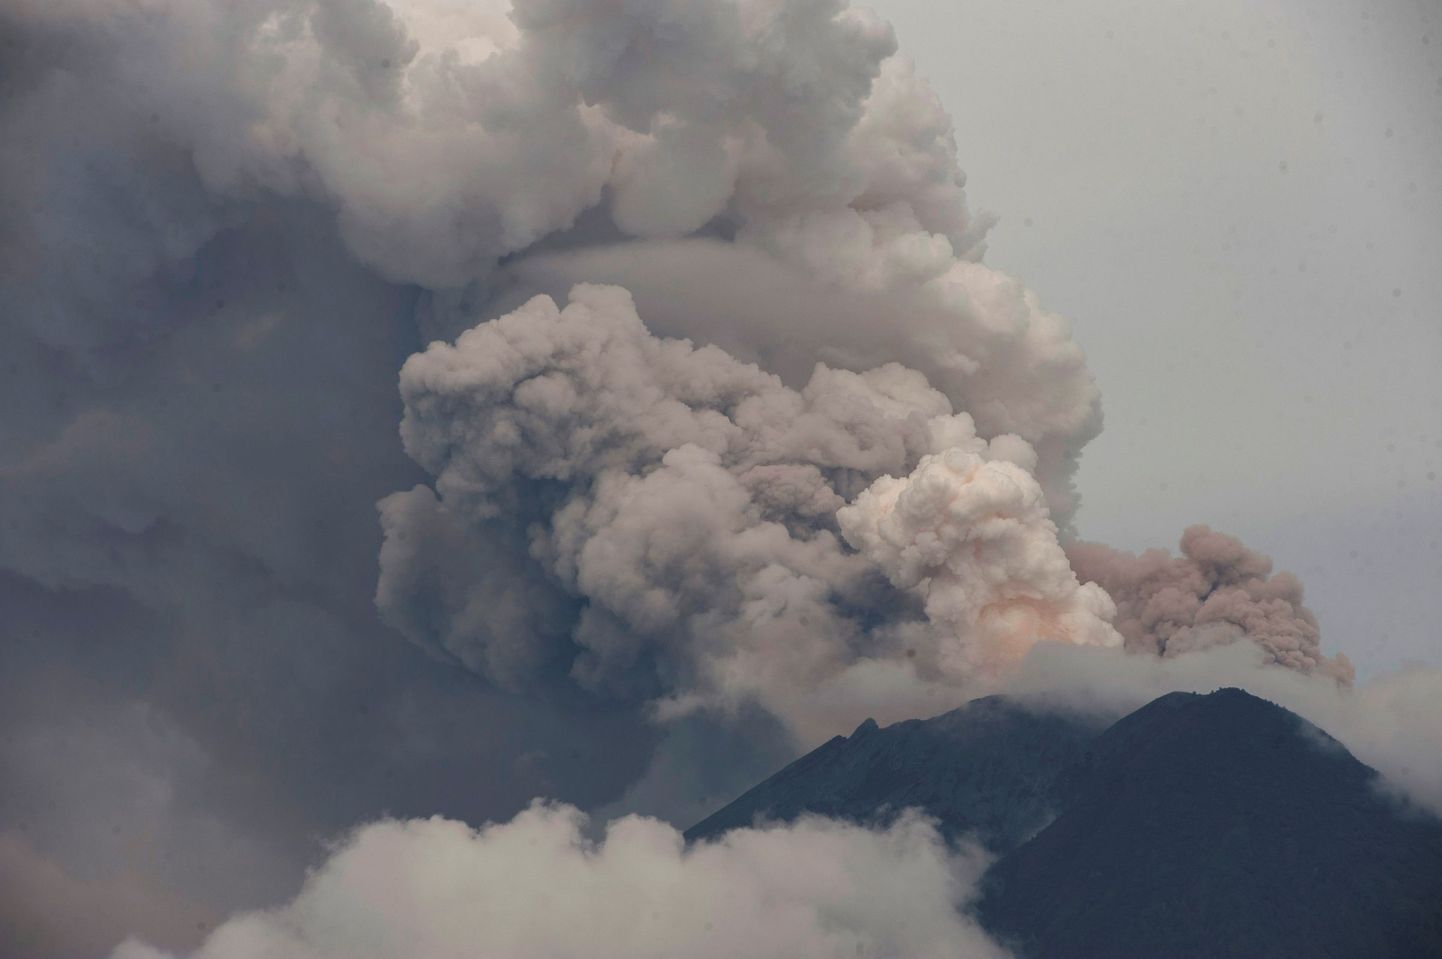 Vaade Agungi vulkaanile Karangasemist